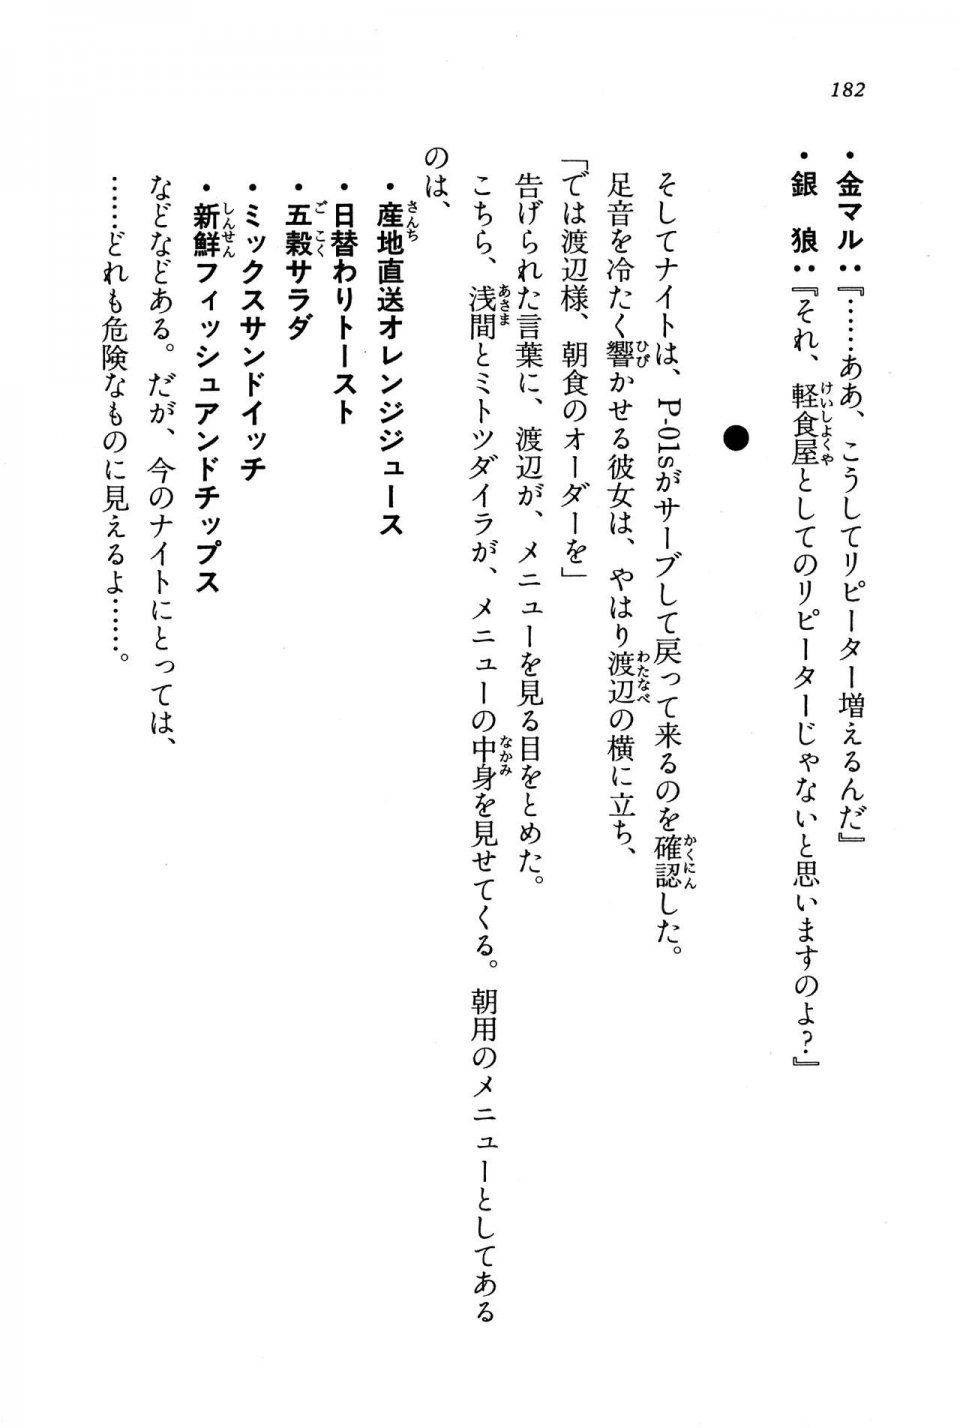 Kyoukai Senjou no Horizon BD Special Mininovel Vol 8(4B) - Photo #186